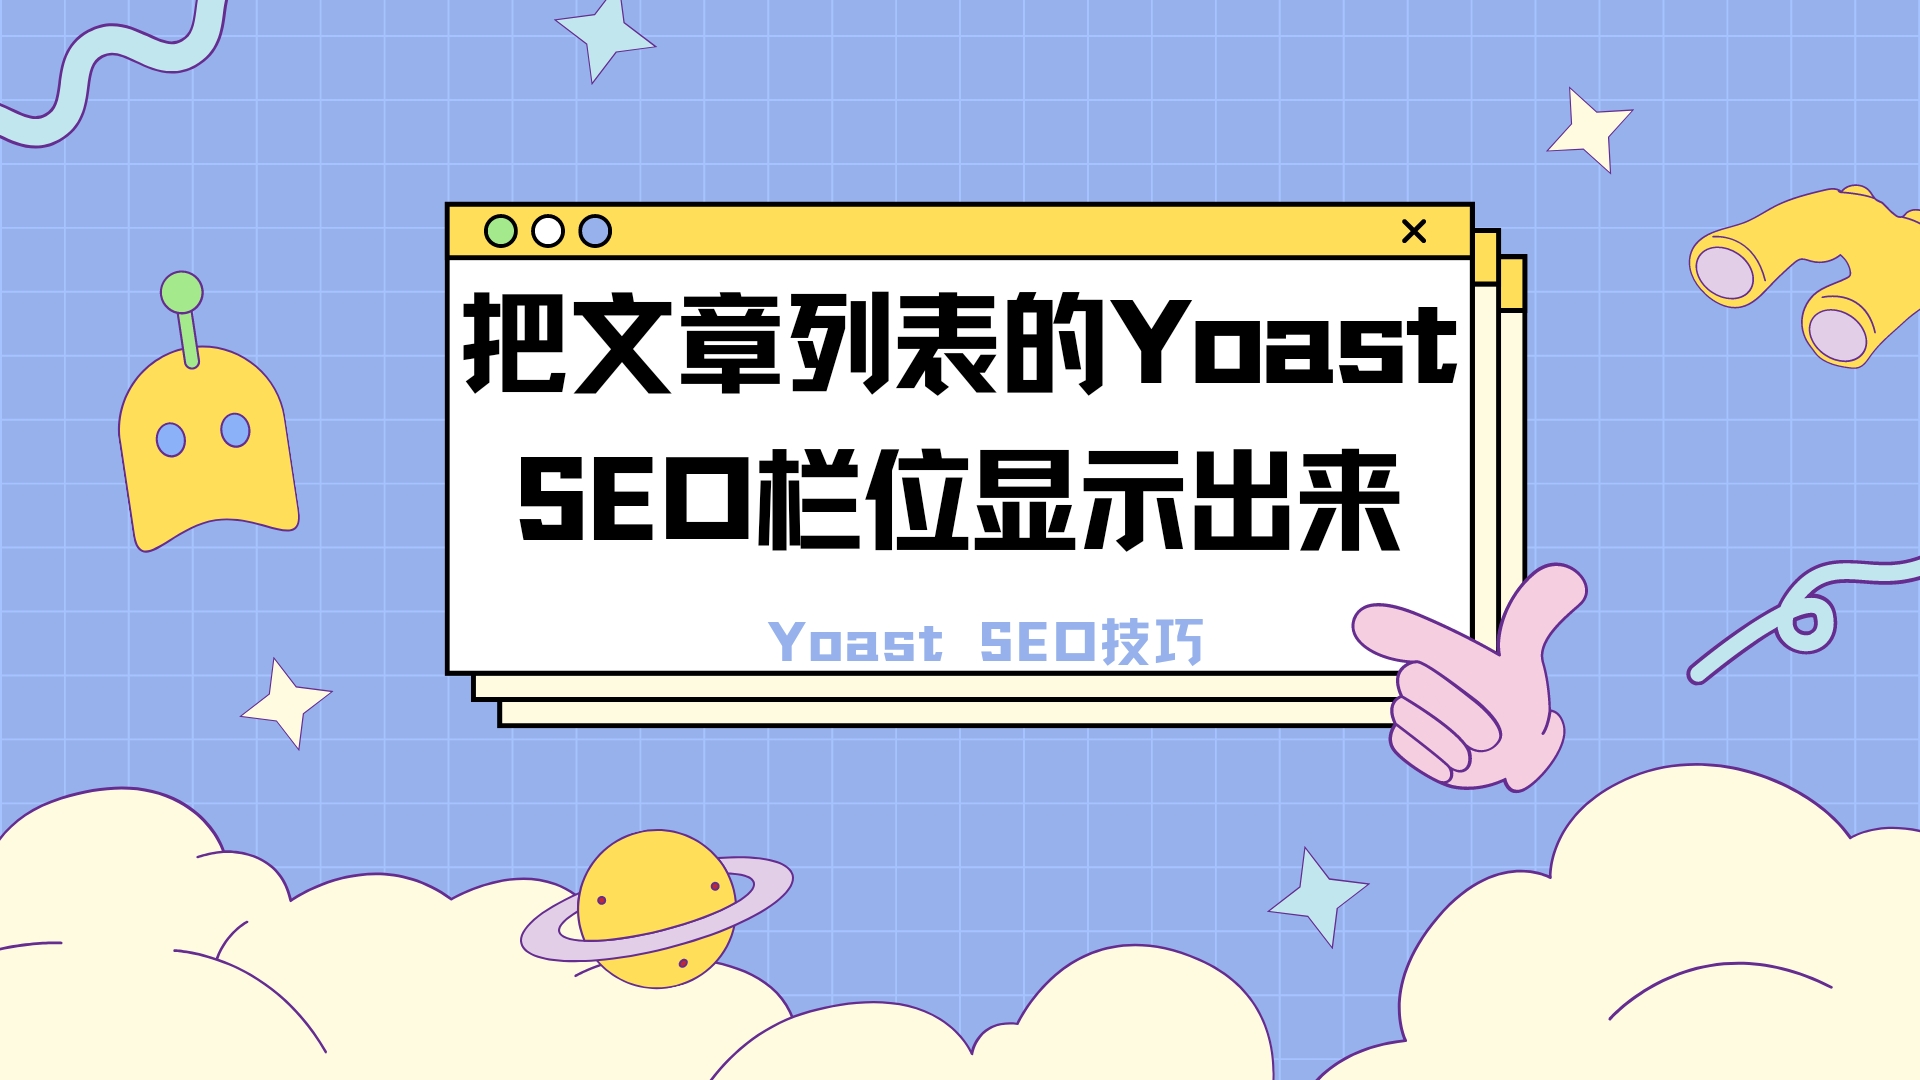 Yoast SEO 技巧: 把文章列表的Yoast SEO栏位显示出来-Baili Blog